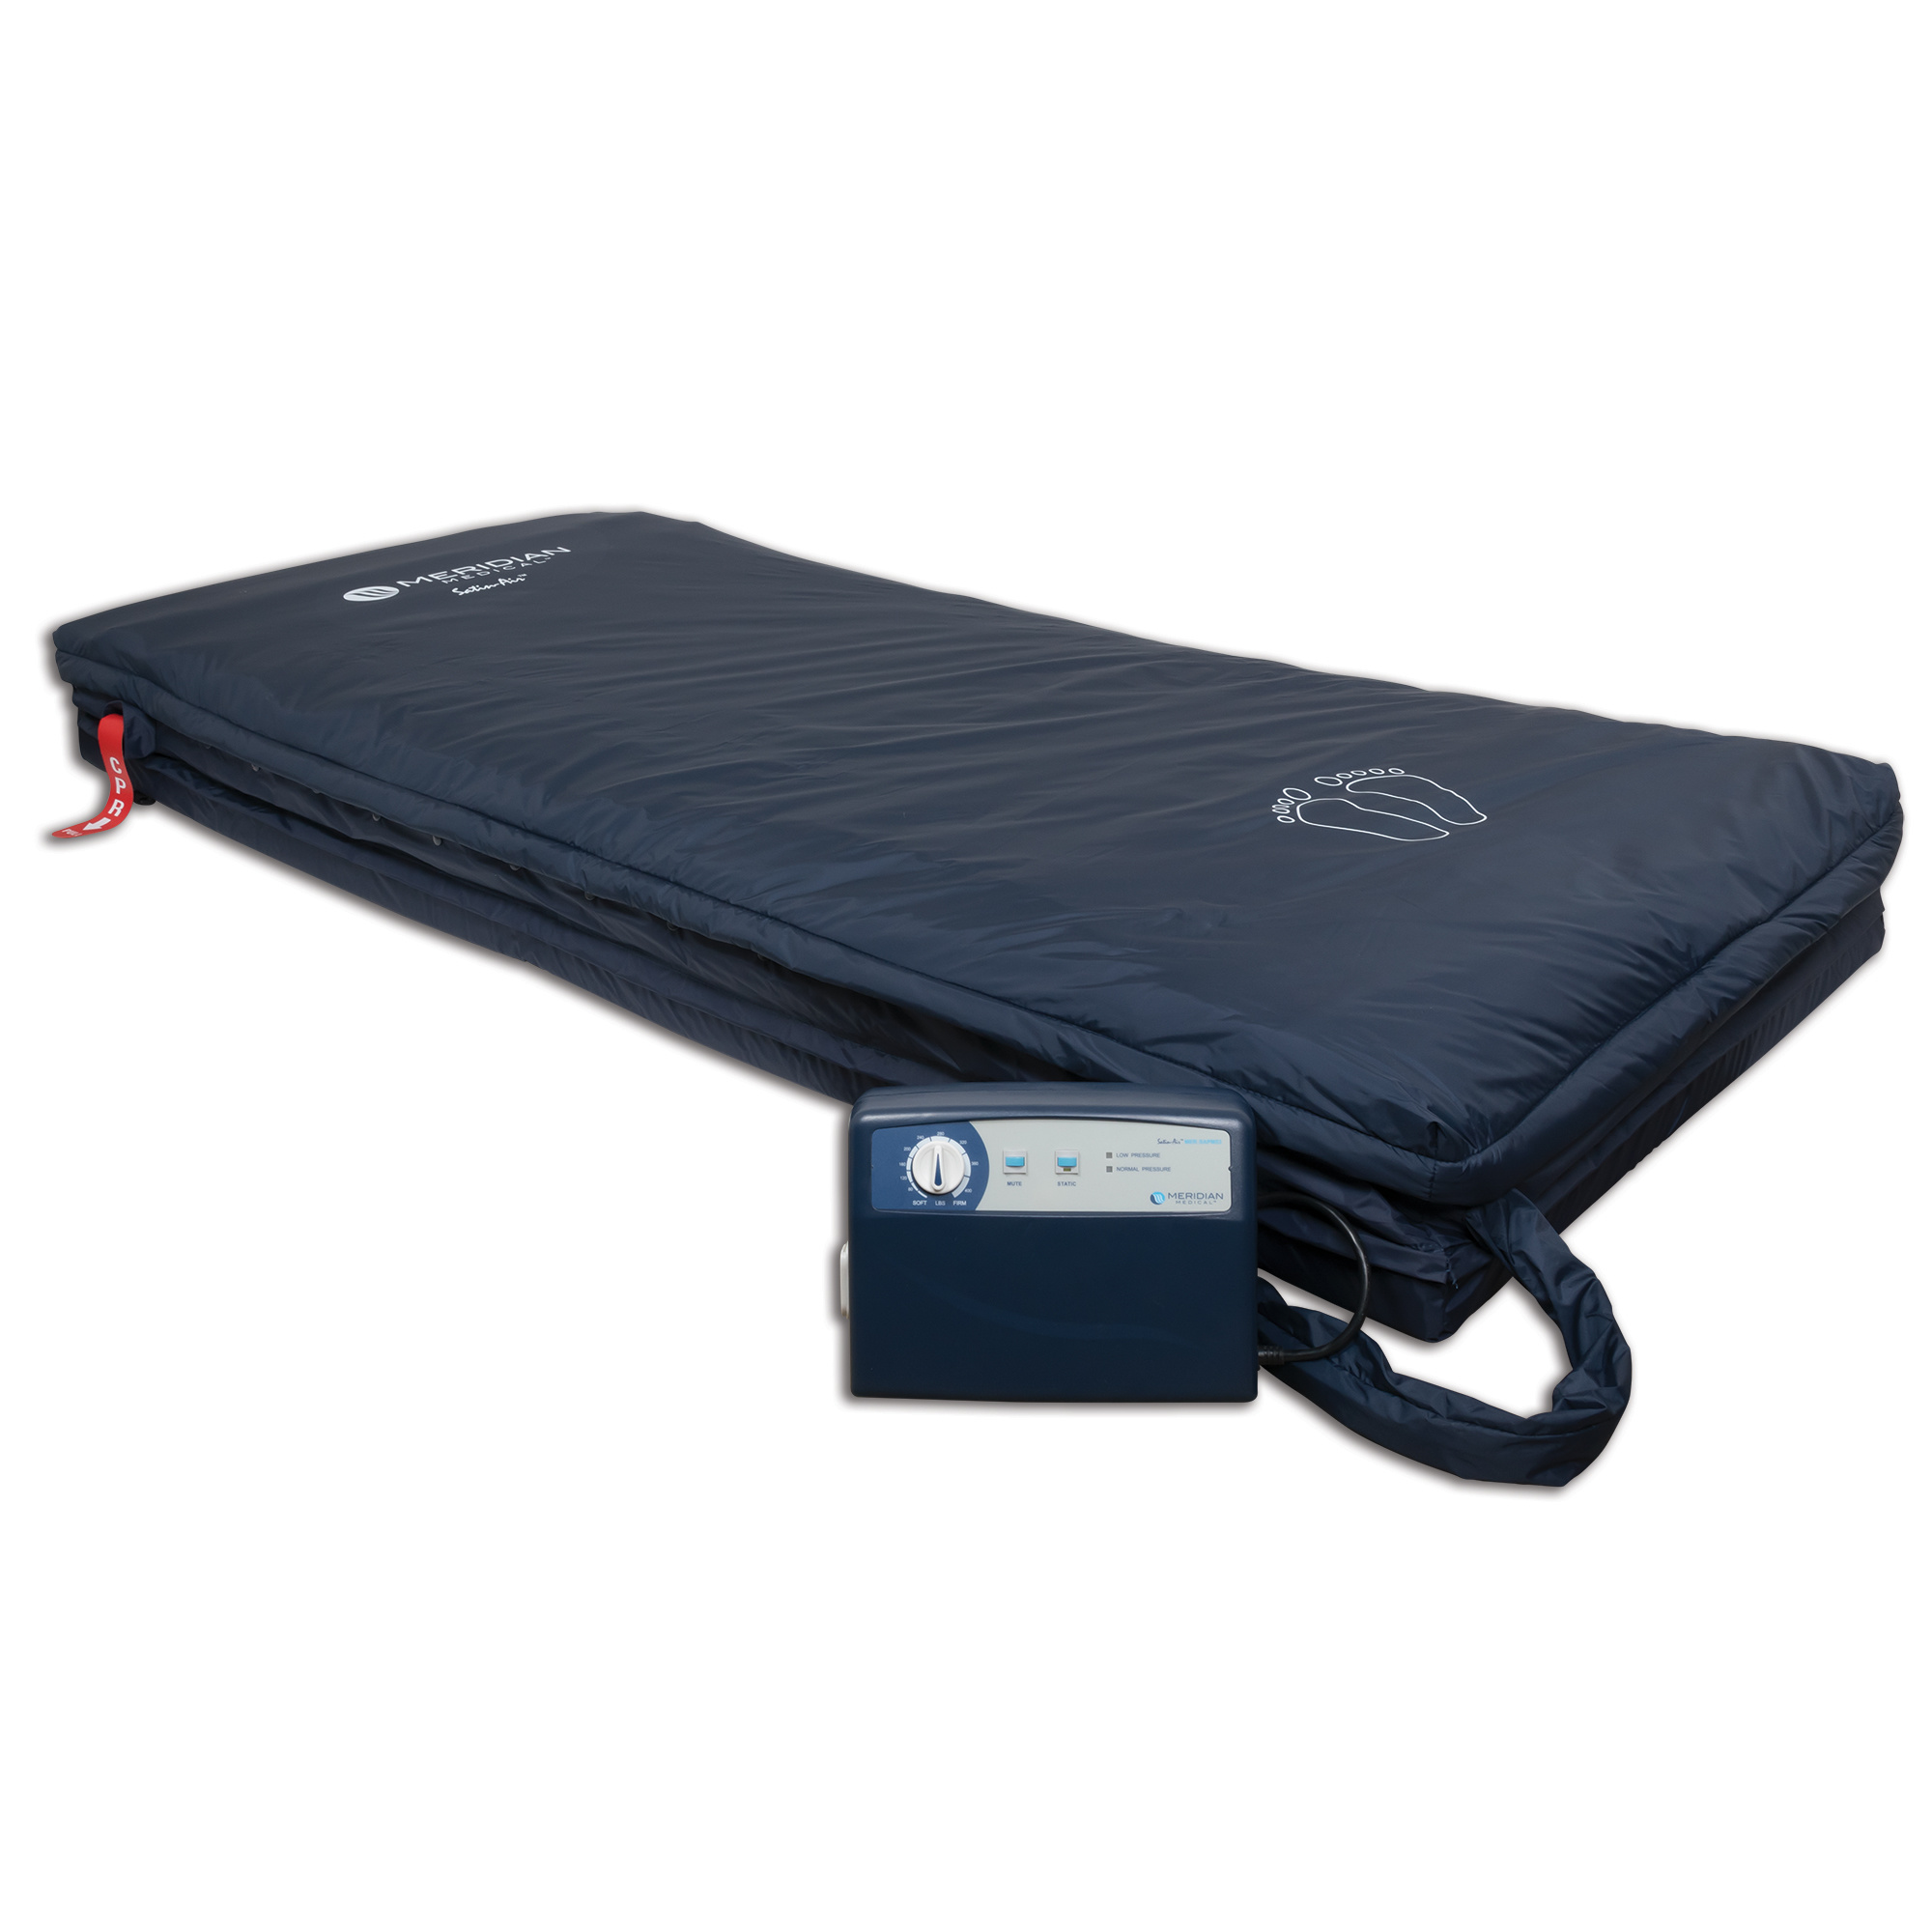 Protekt O2 Air Adjustable Cushions for Pressure Redistribution